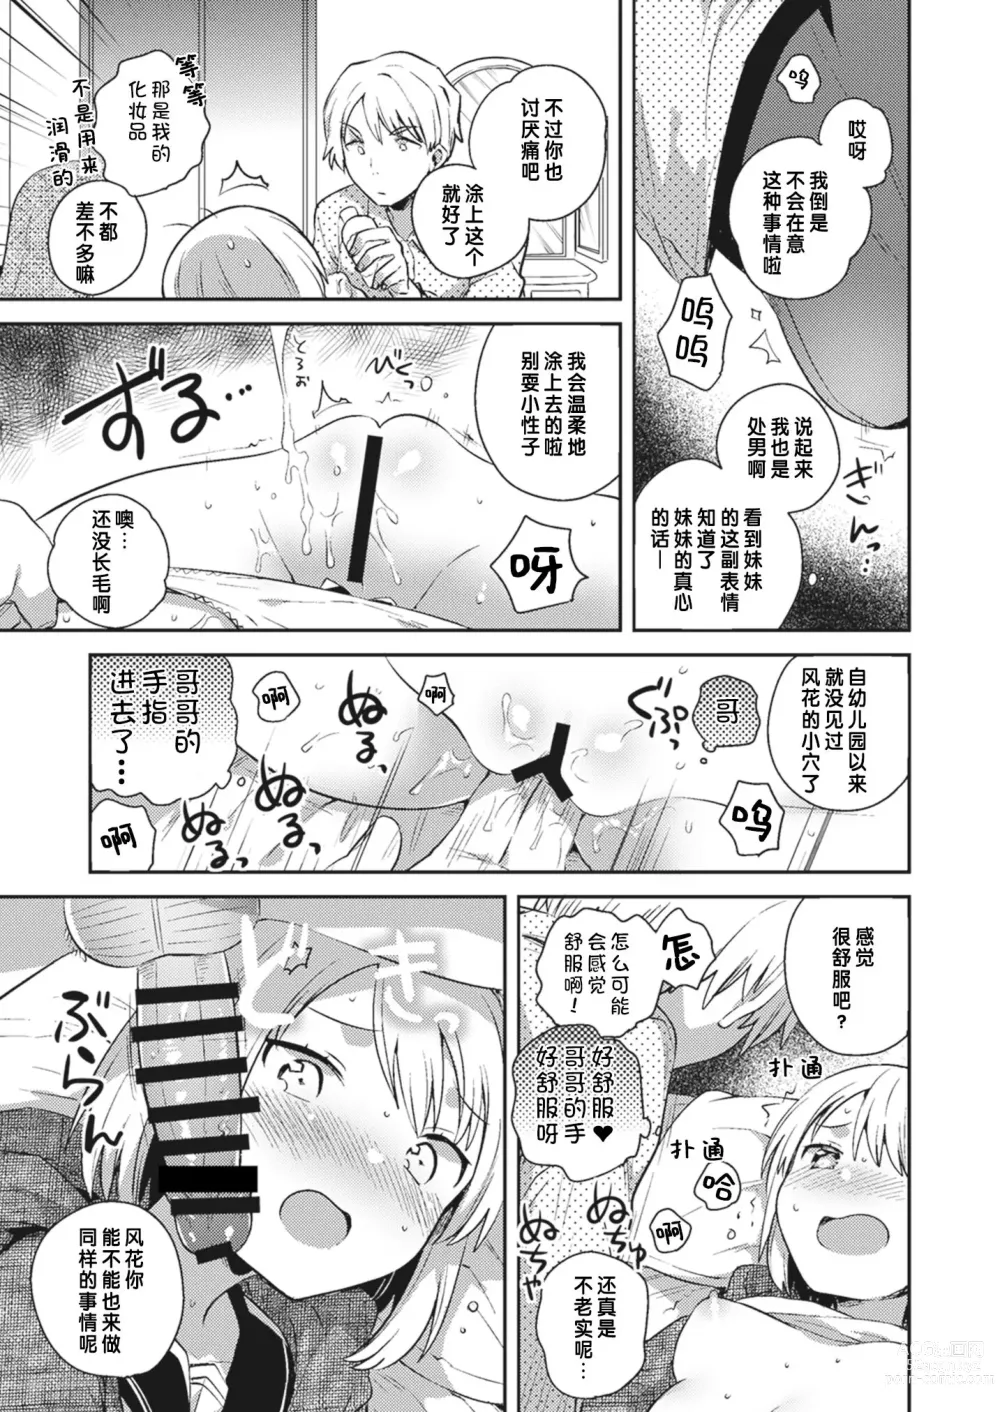 Page 7 of doujinshi 能听见妹妹的心声